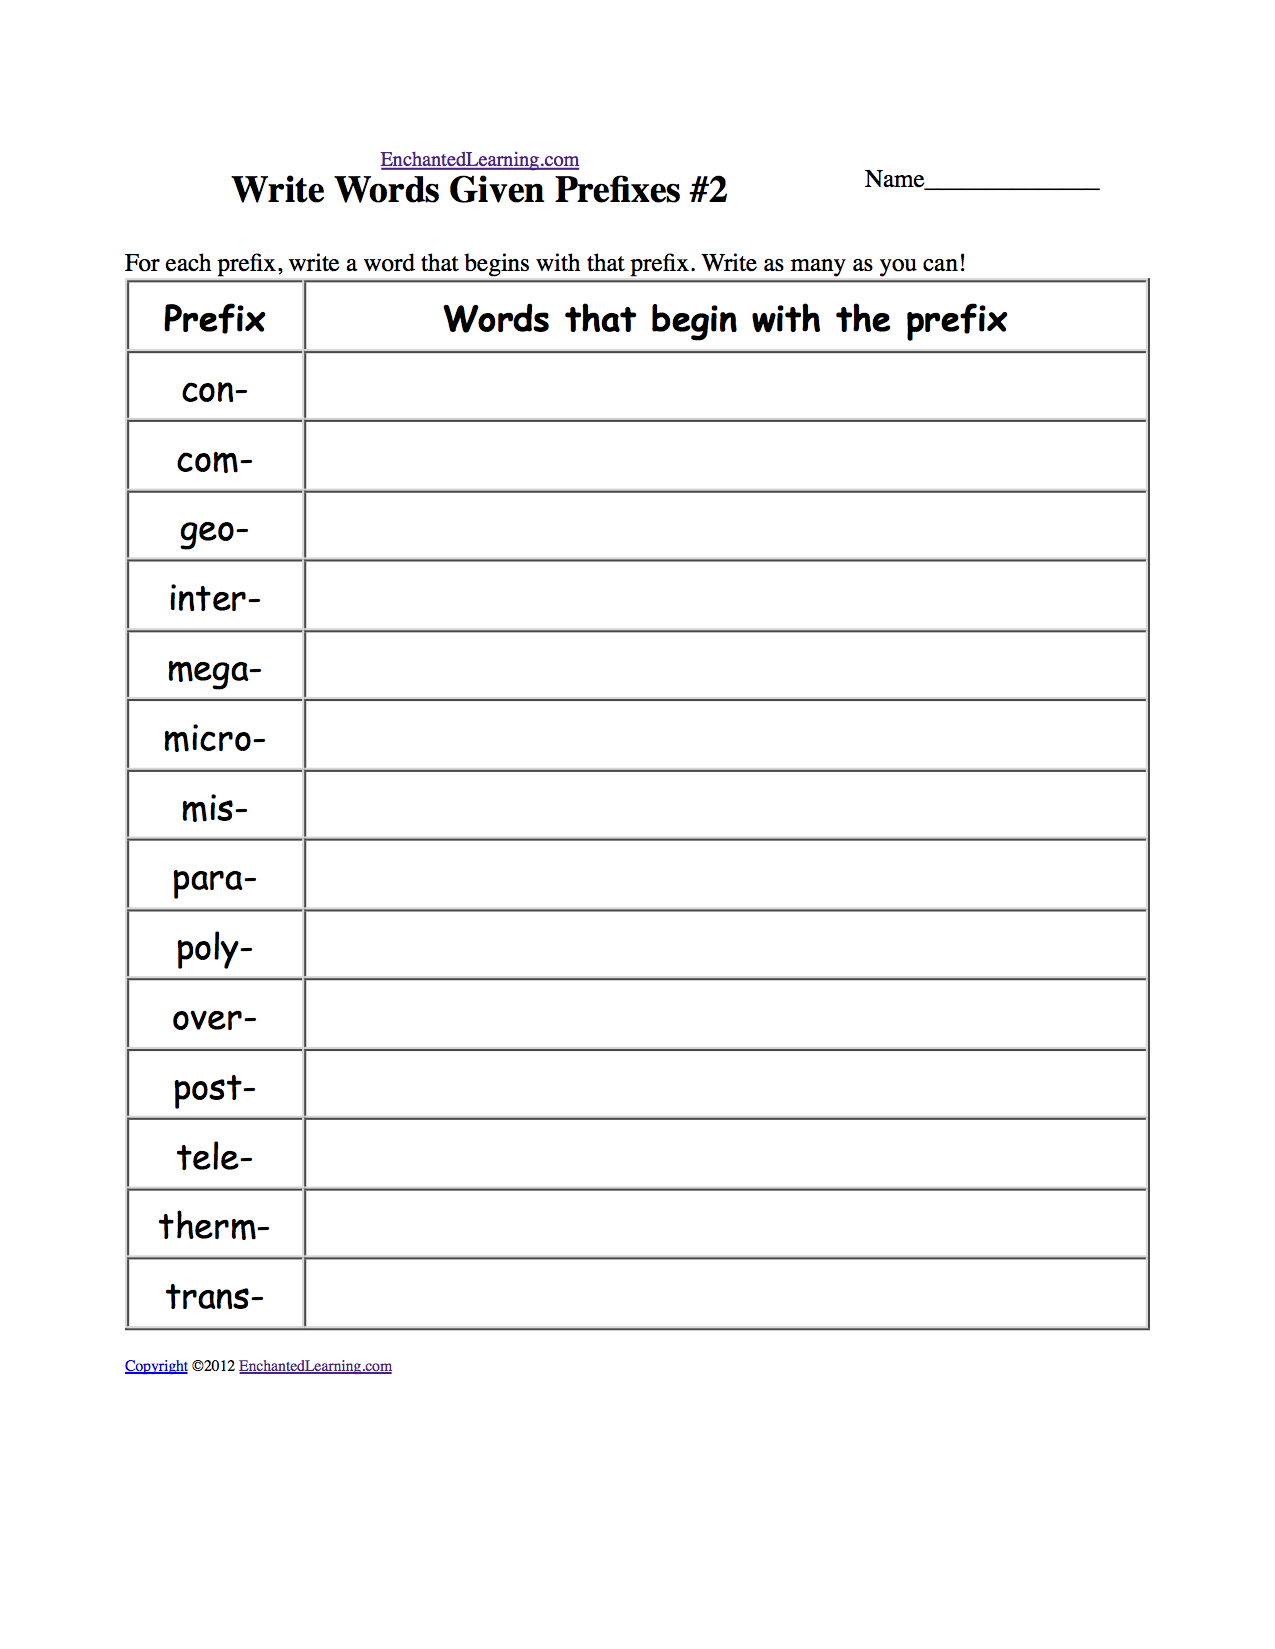 Write Words Given Prefixes: Worksheets. EnchantedLearning.com